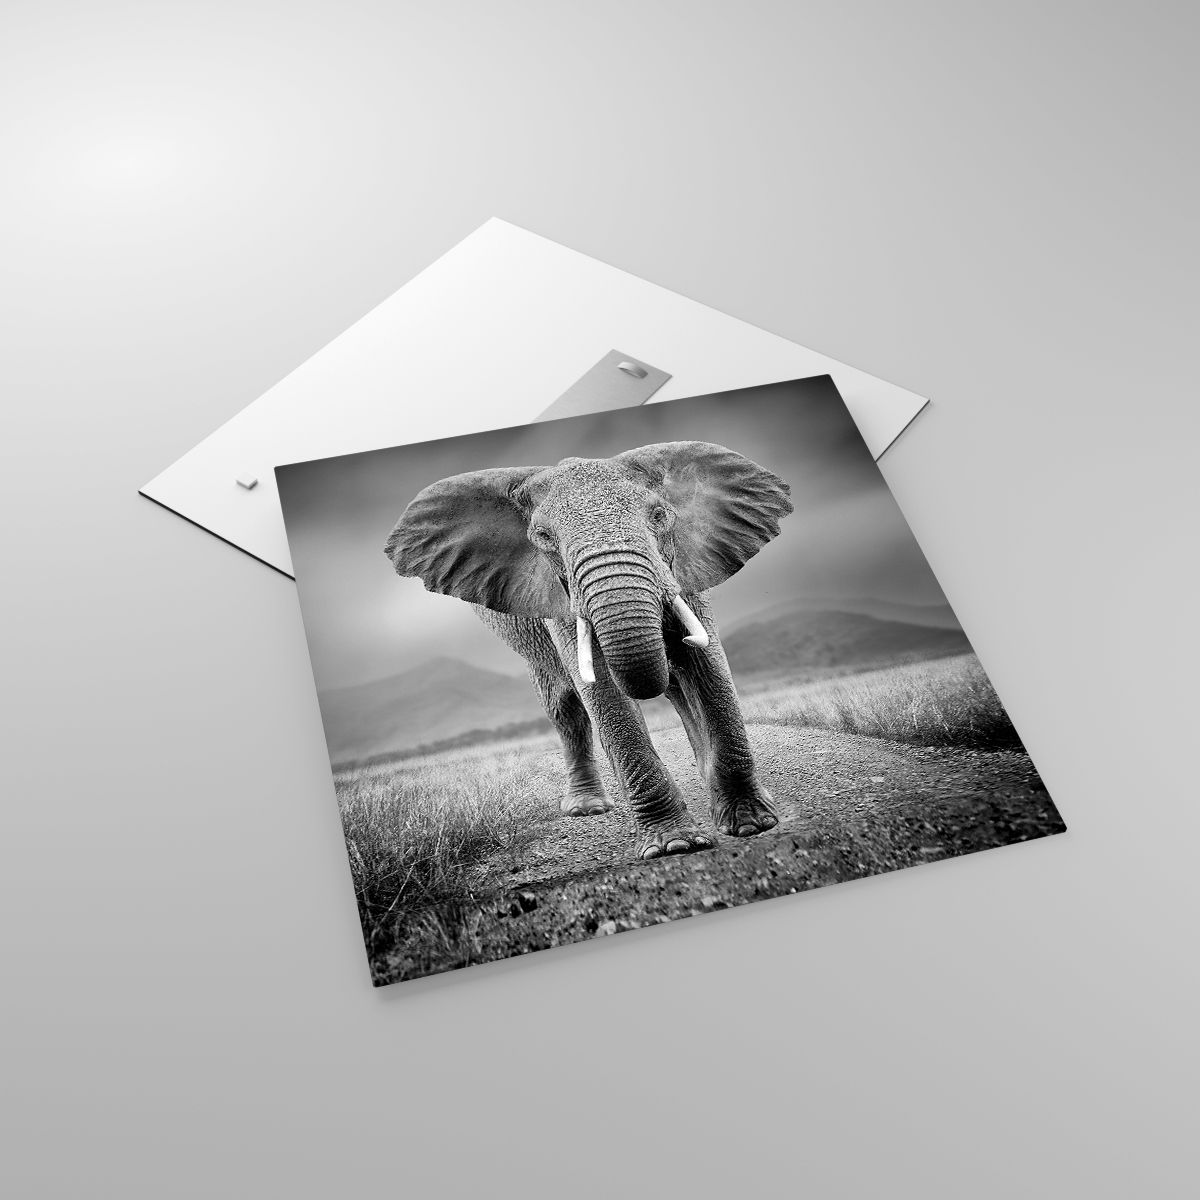 Glasbild Elefant, Glasbild Tiere, Glasbild Landschaft, Glasbild Natur, Glasbild Afrika